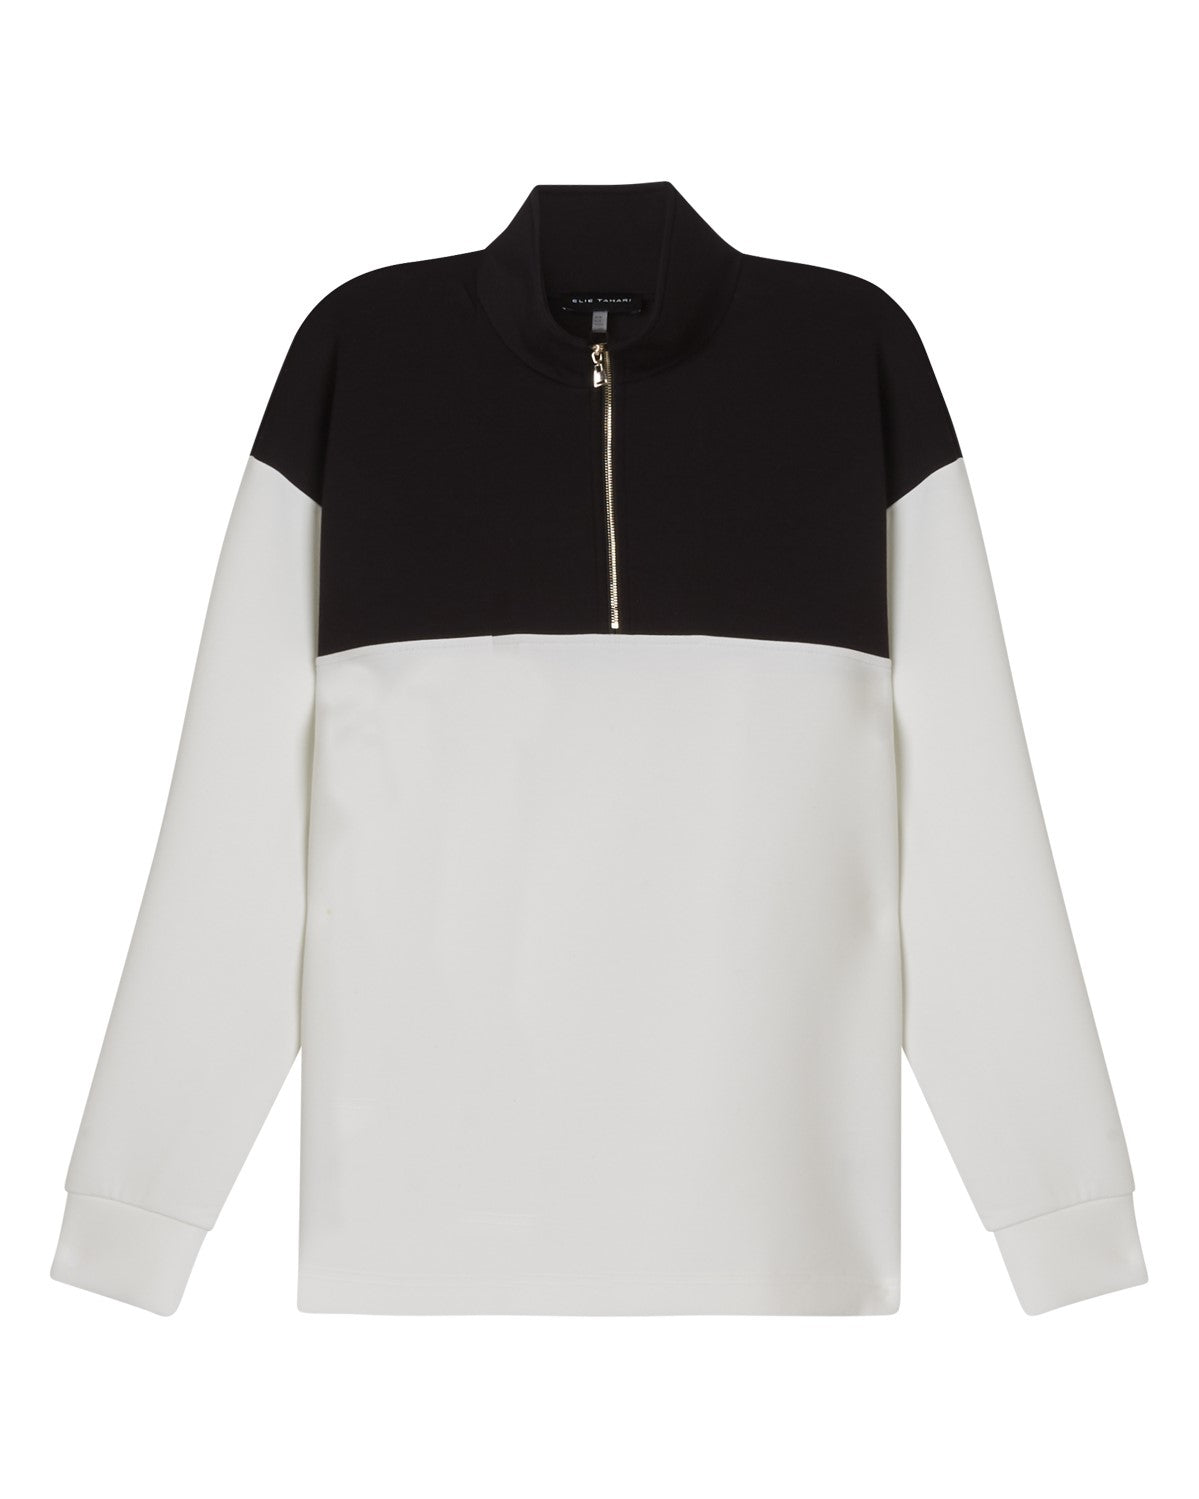 Men's Color-Blocked Quarter Zip Sweatshirt, Black/White | Elie Tahari Men's